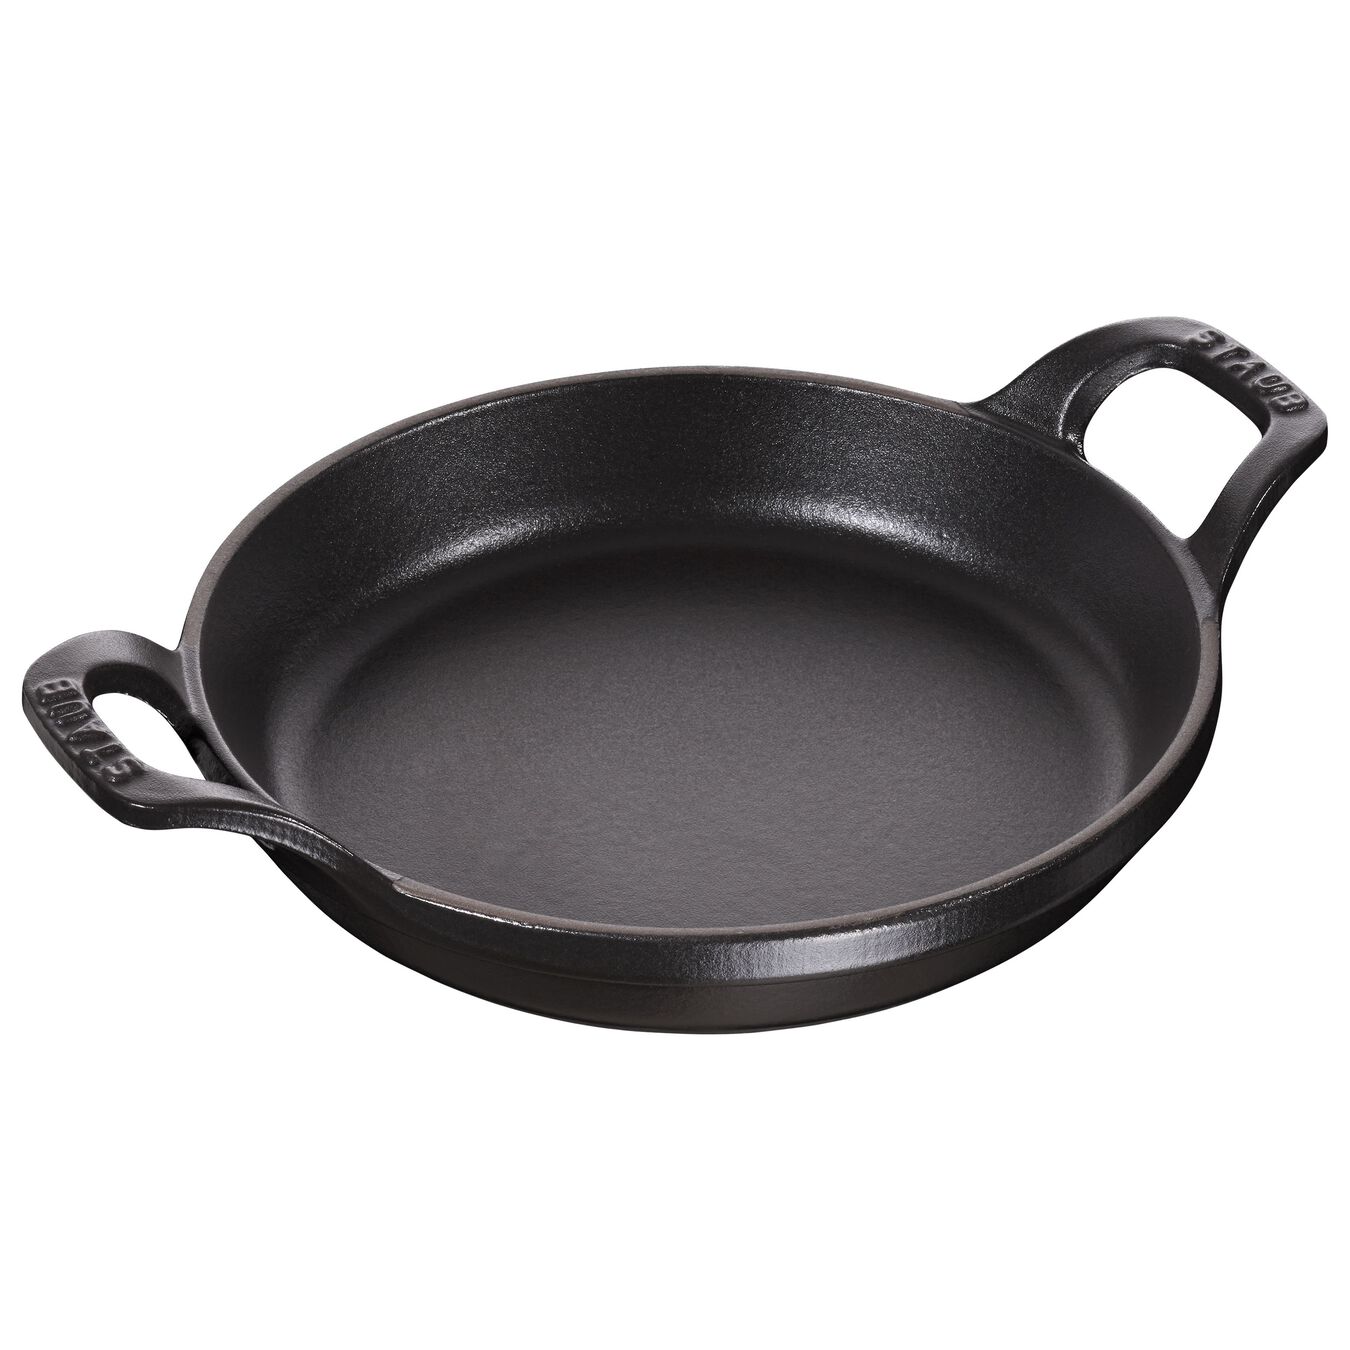  cast iron round Oven dish, black,,large 3